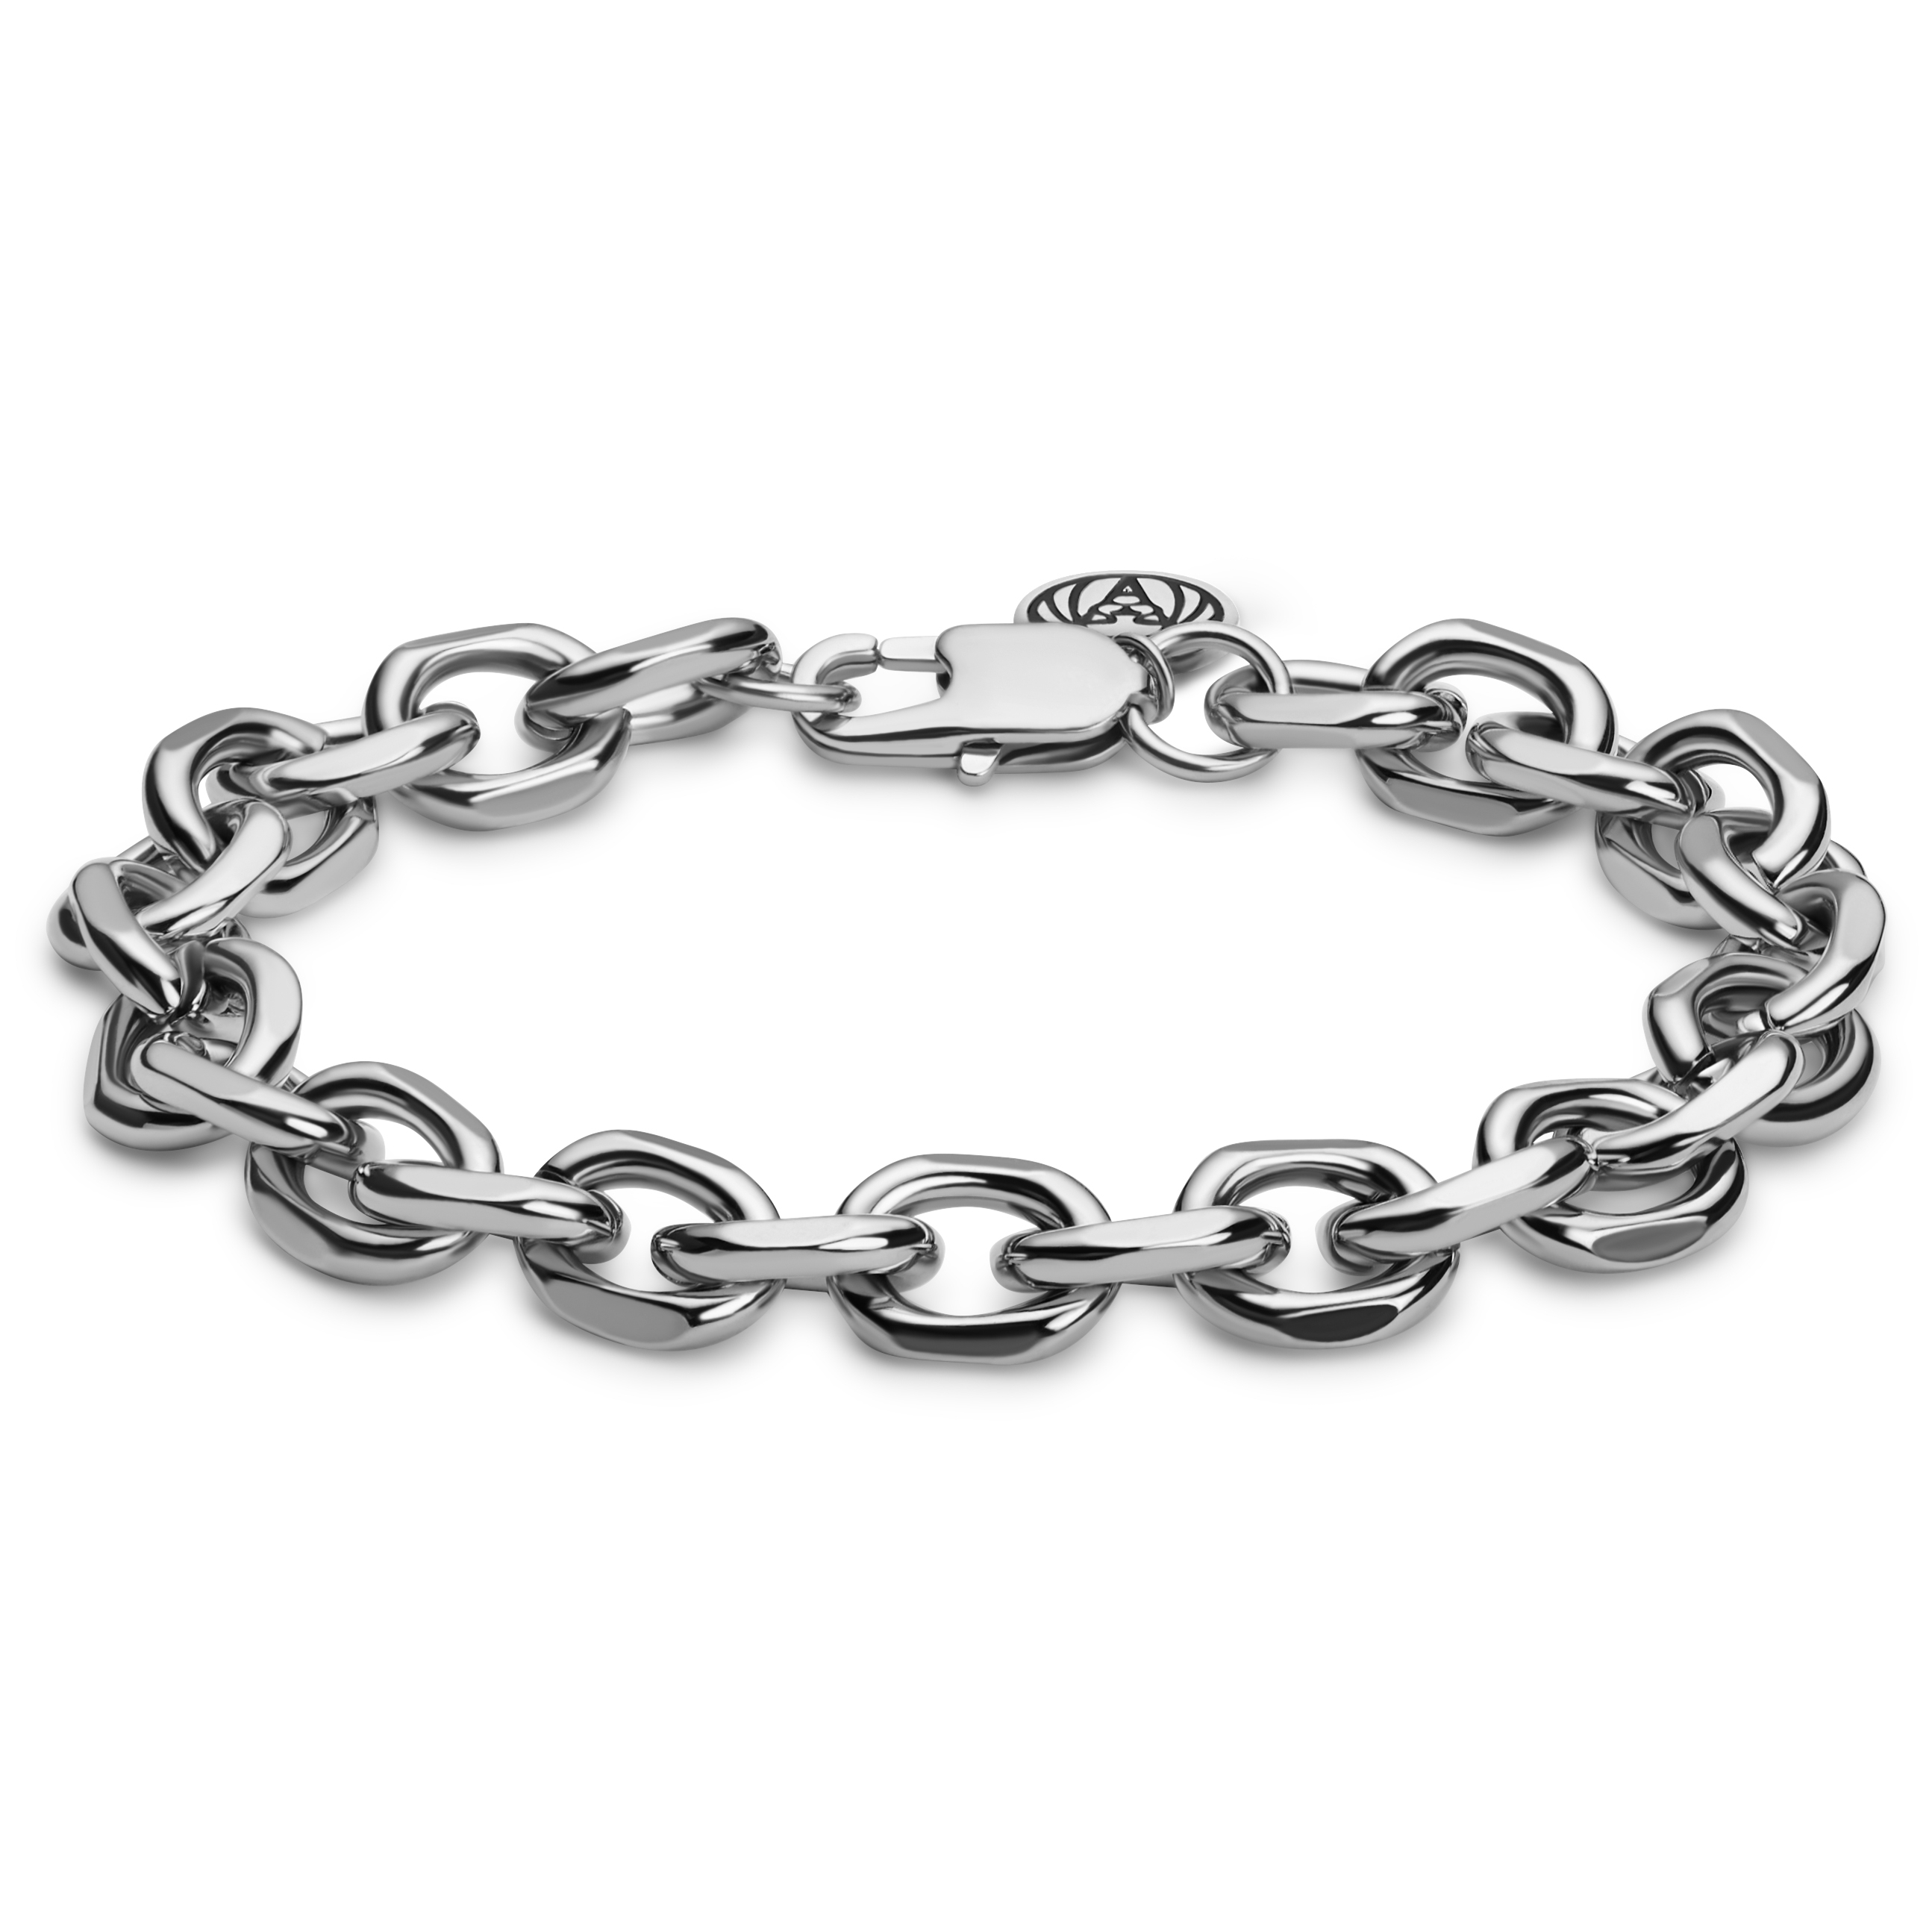 Buy Gold Stainless Steel 5.6mm Figaro Chain Bracelet Online - Inox Jewelry  India